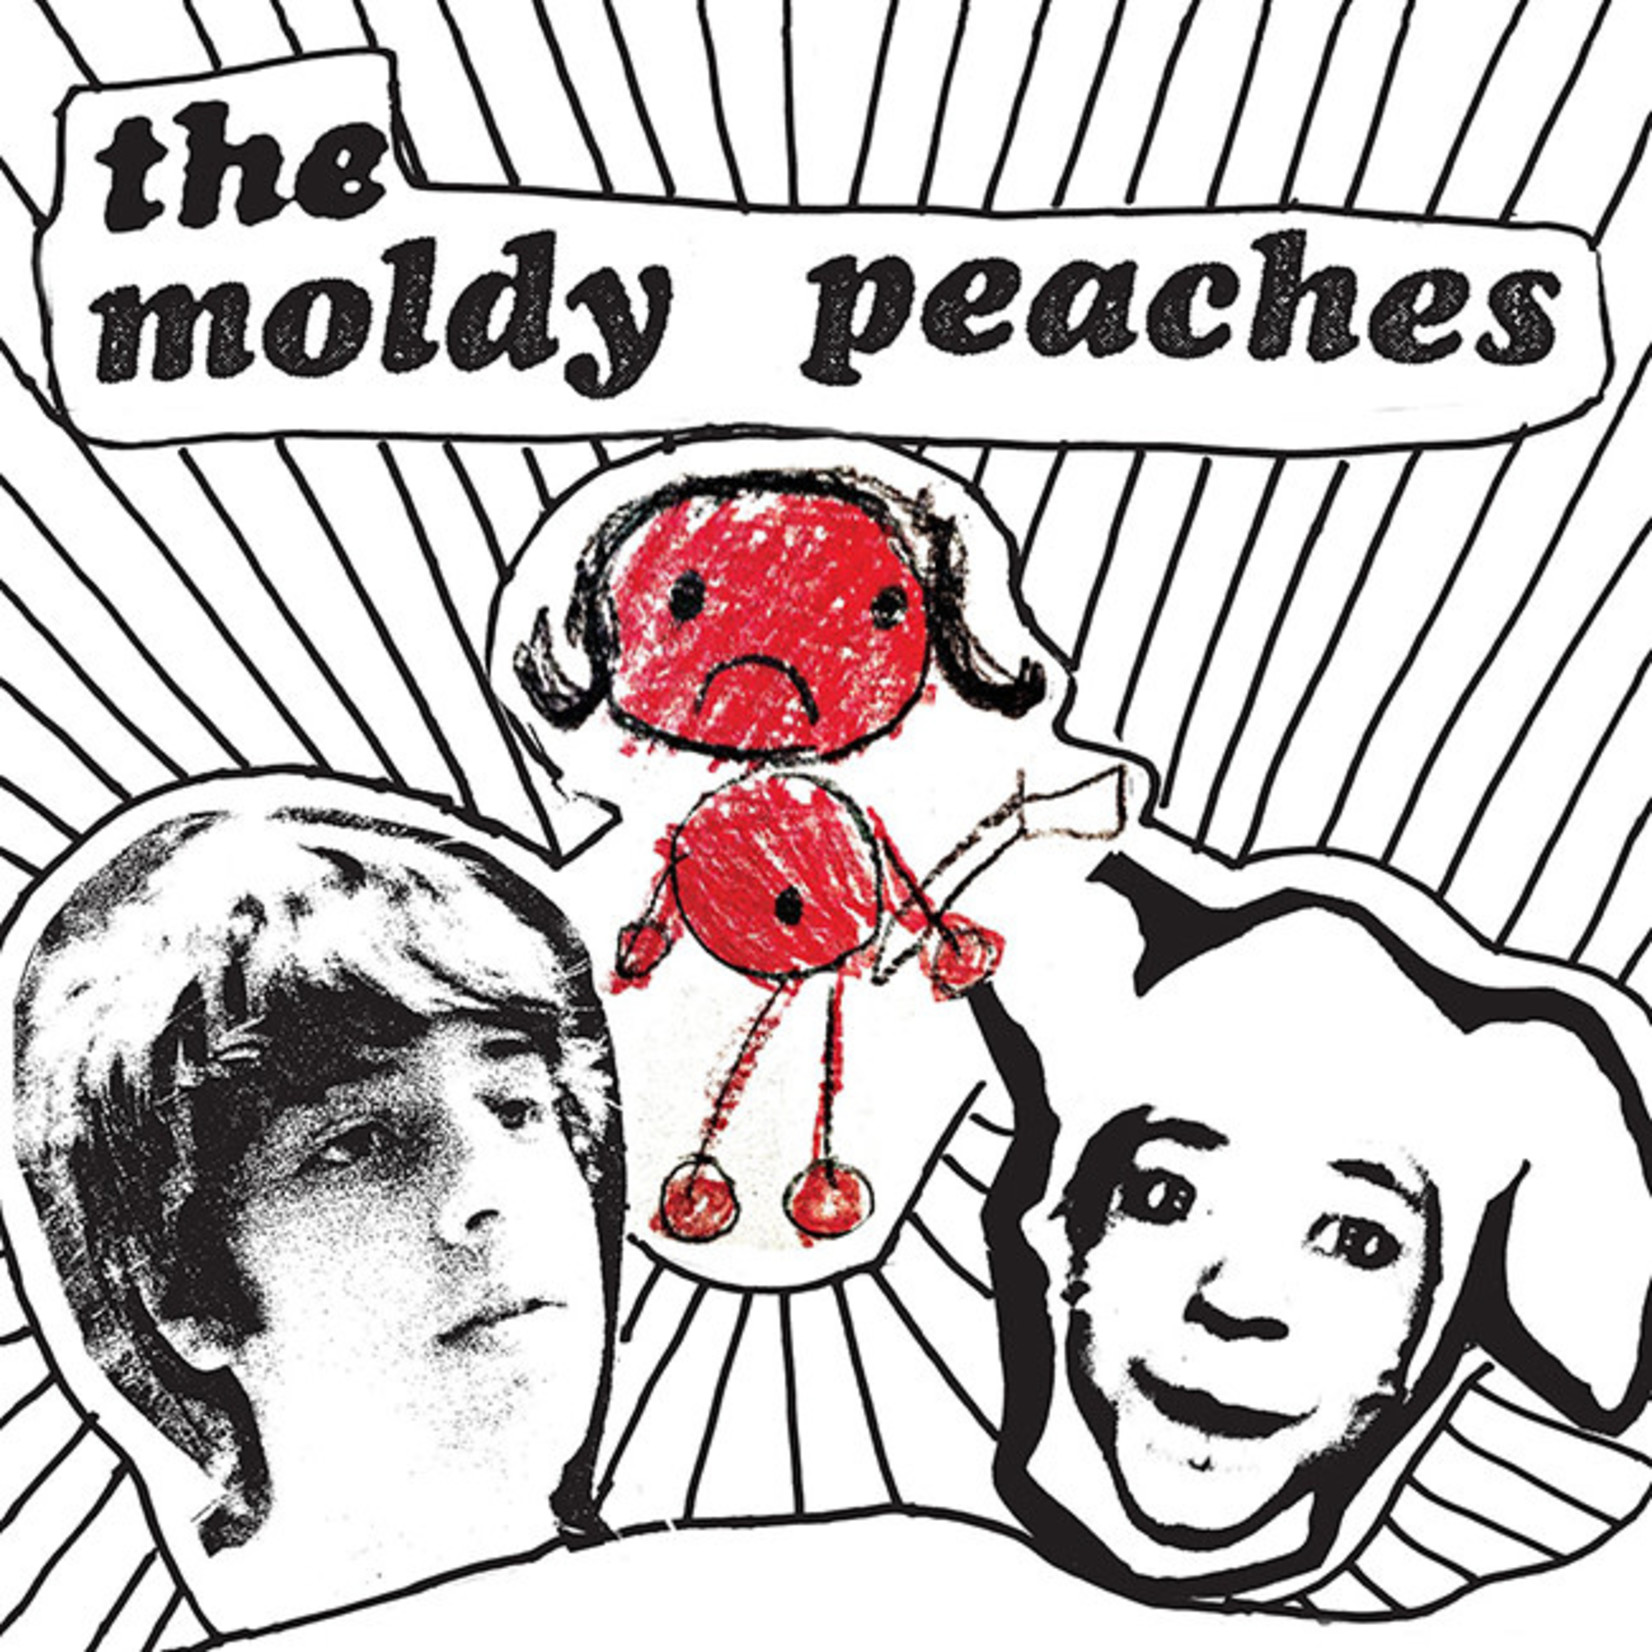 [New] Moldy Peaches - The Moldy Peaches (LP+7", red vinyl)